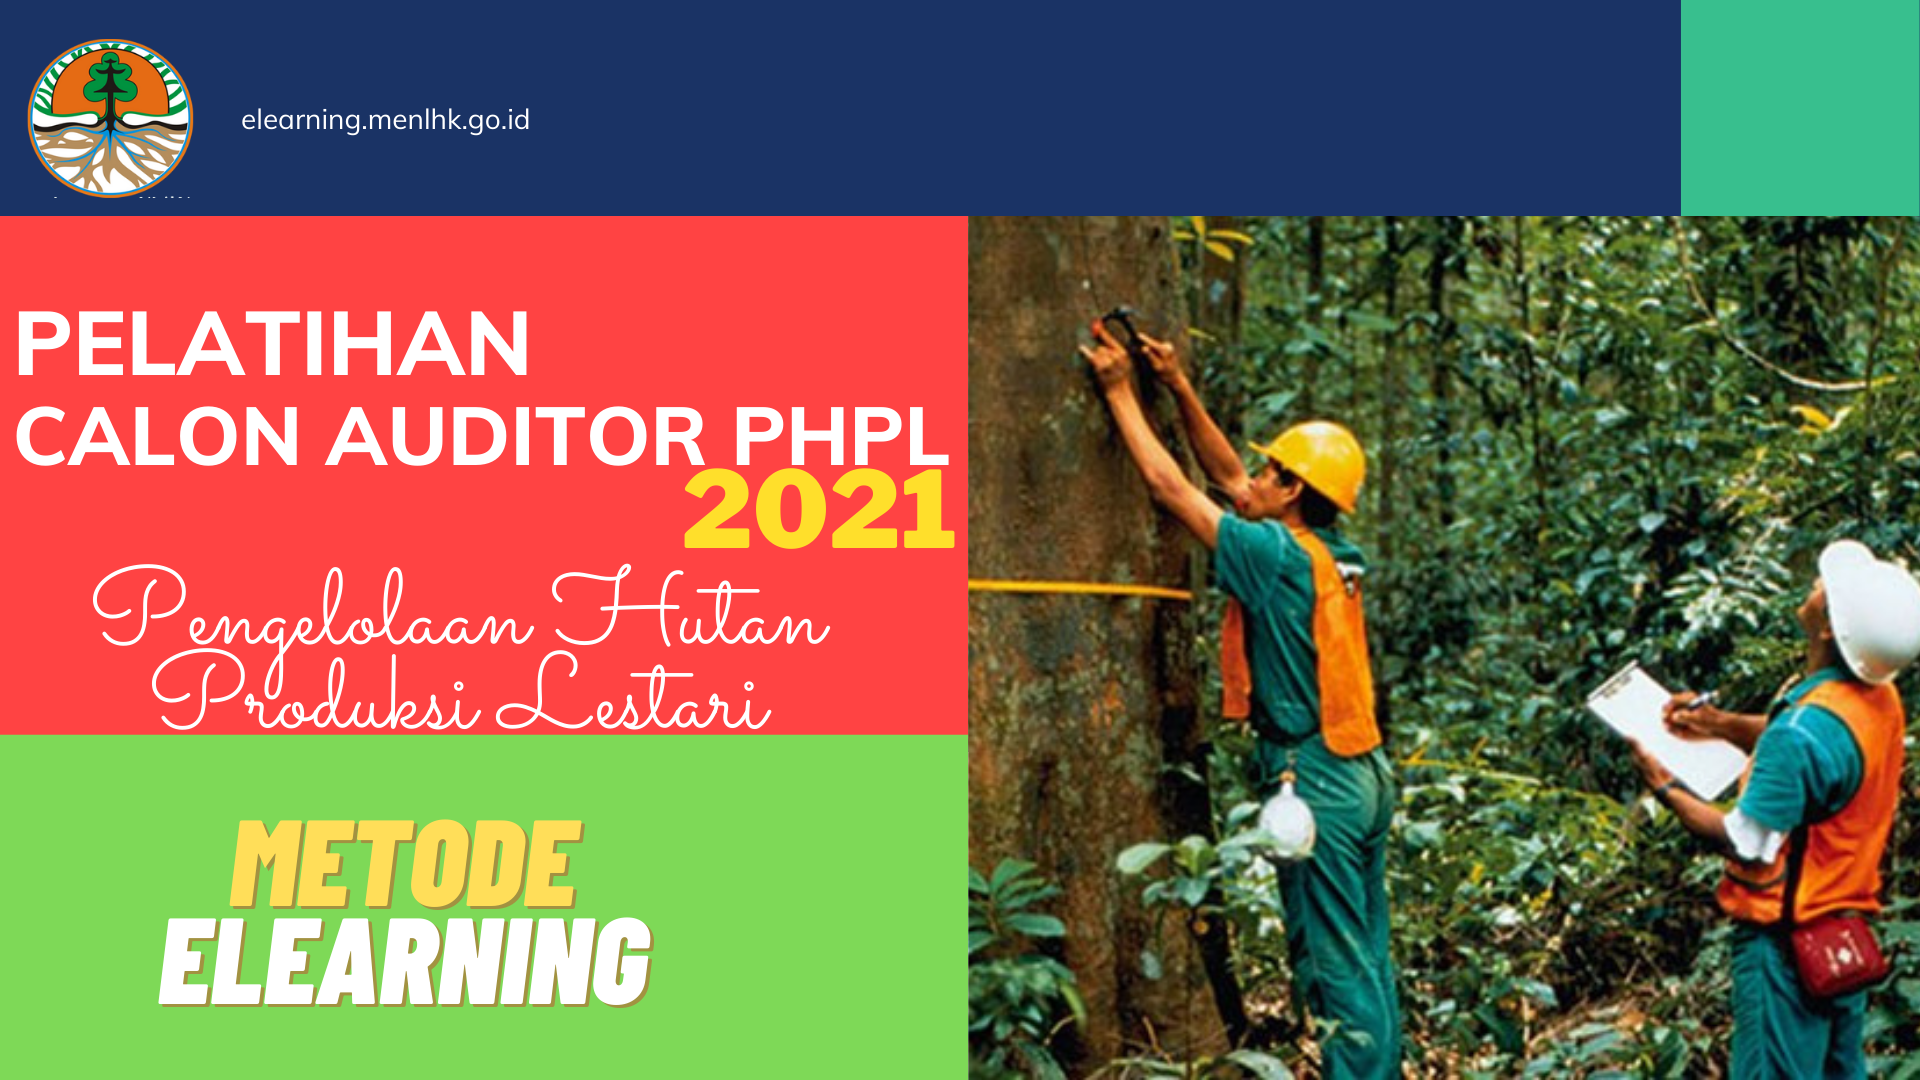 Pelatihan Calon Auditor PHPL untuk Hutan Negara